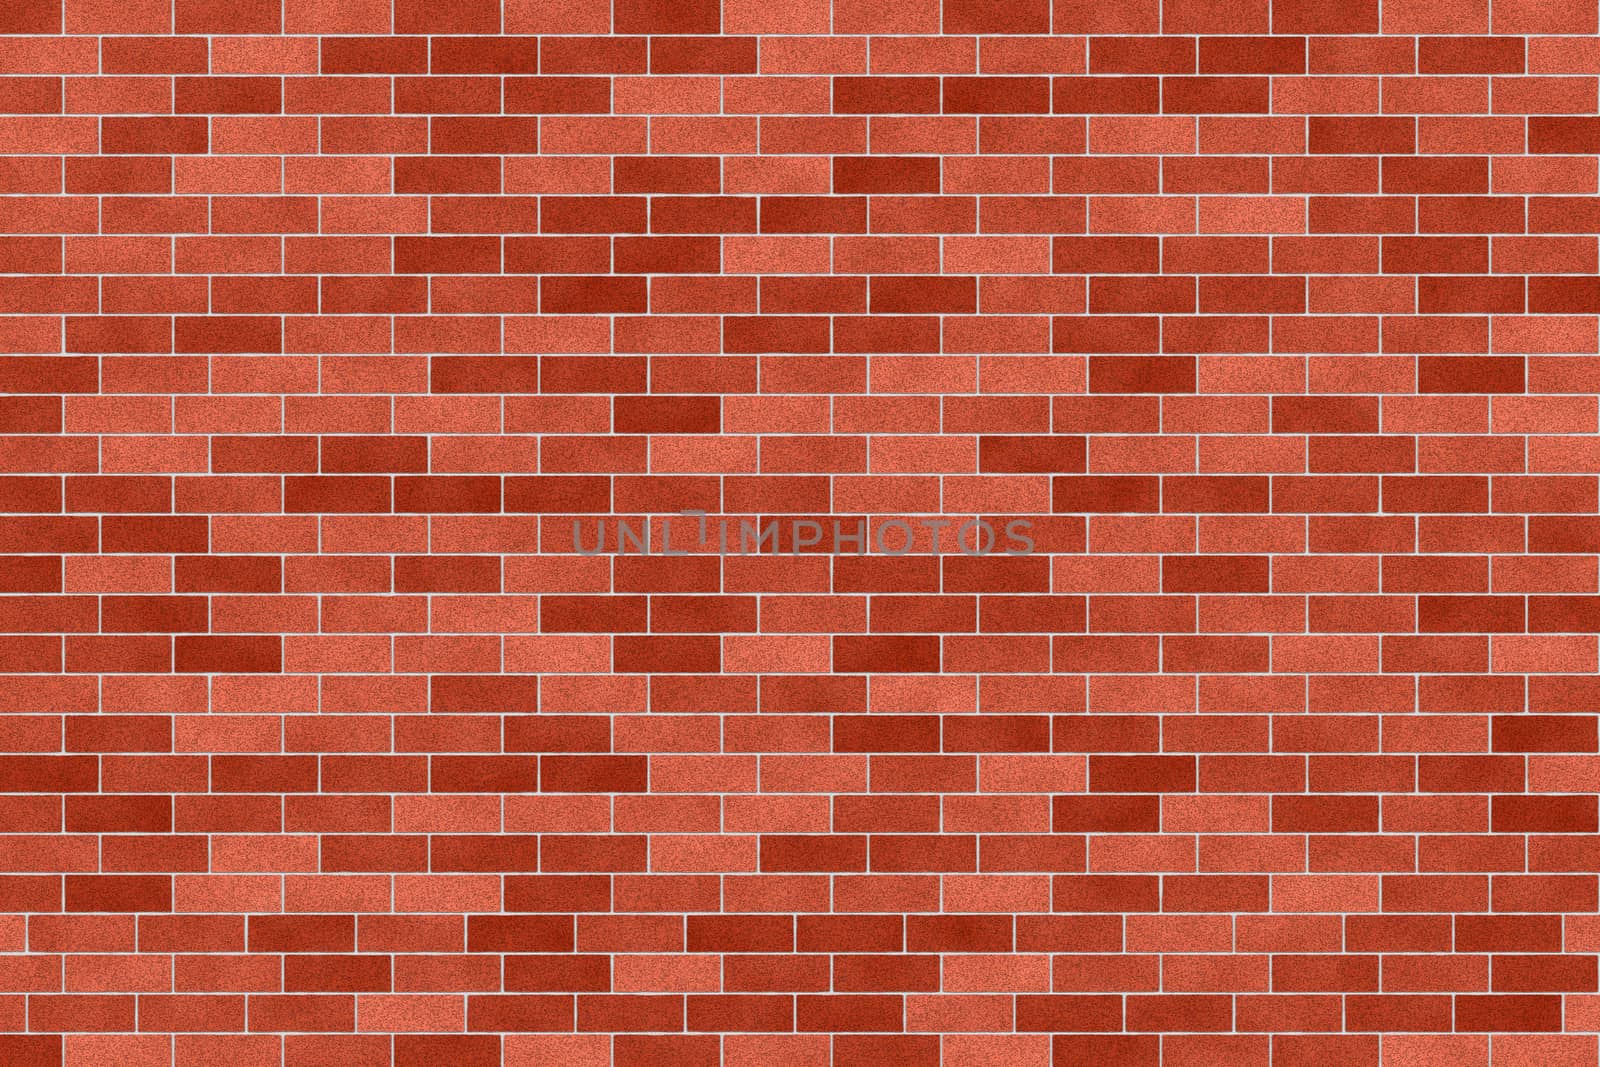 brick wall seamless illustration background - texture